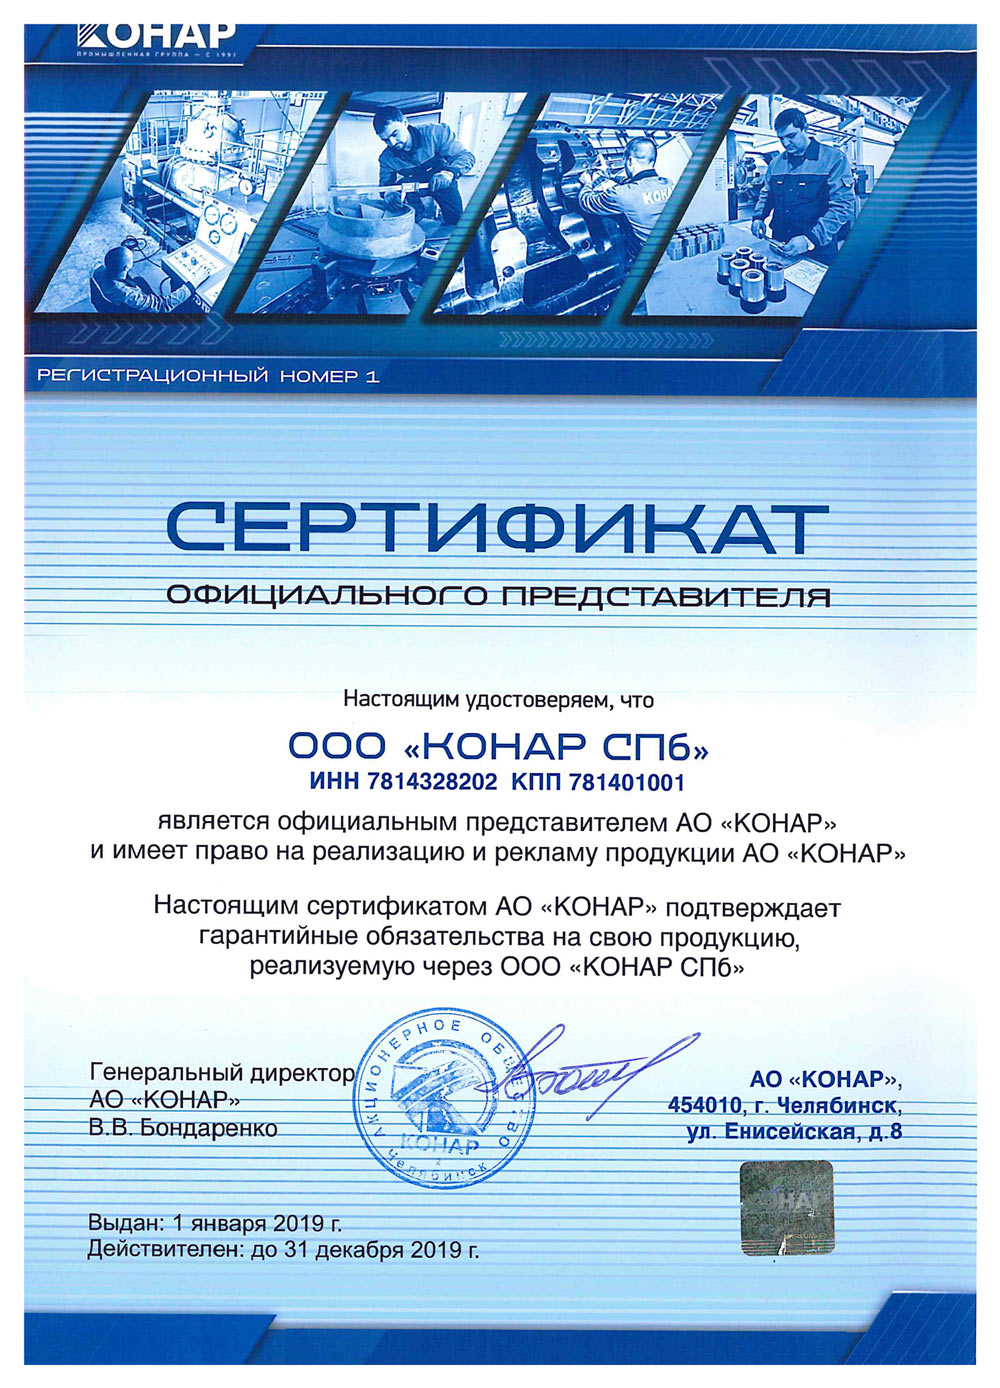 La Scuola tecnica di meccanica e tecnologia di Čeljabinsk istruirà personale per l’ingegneria meccanica.